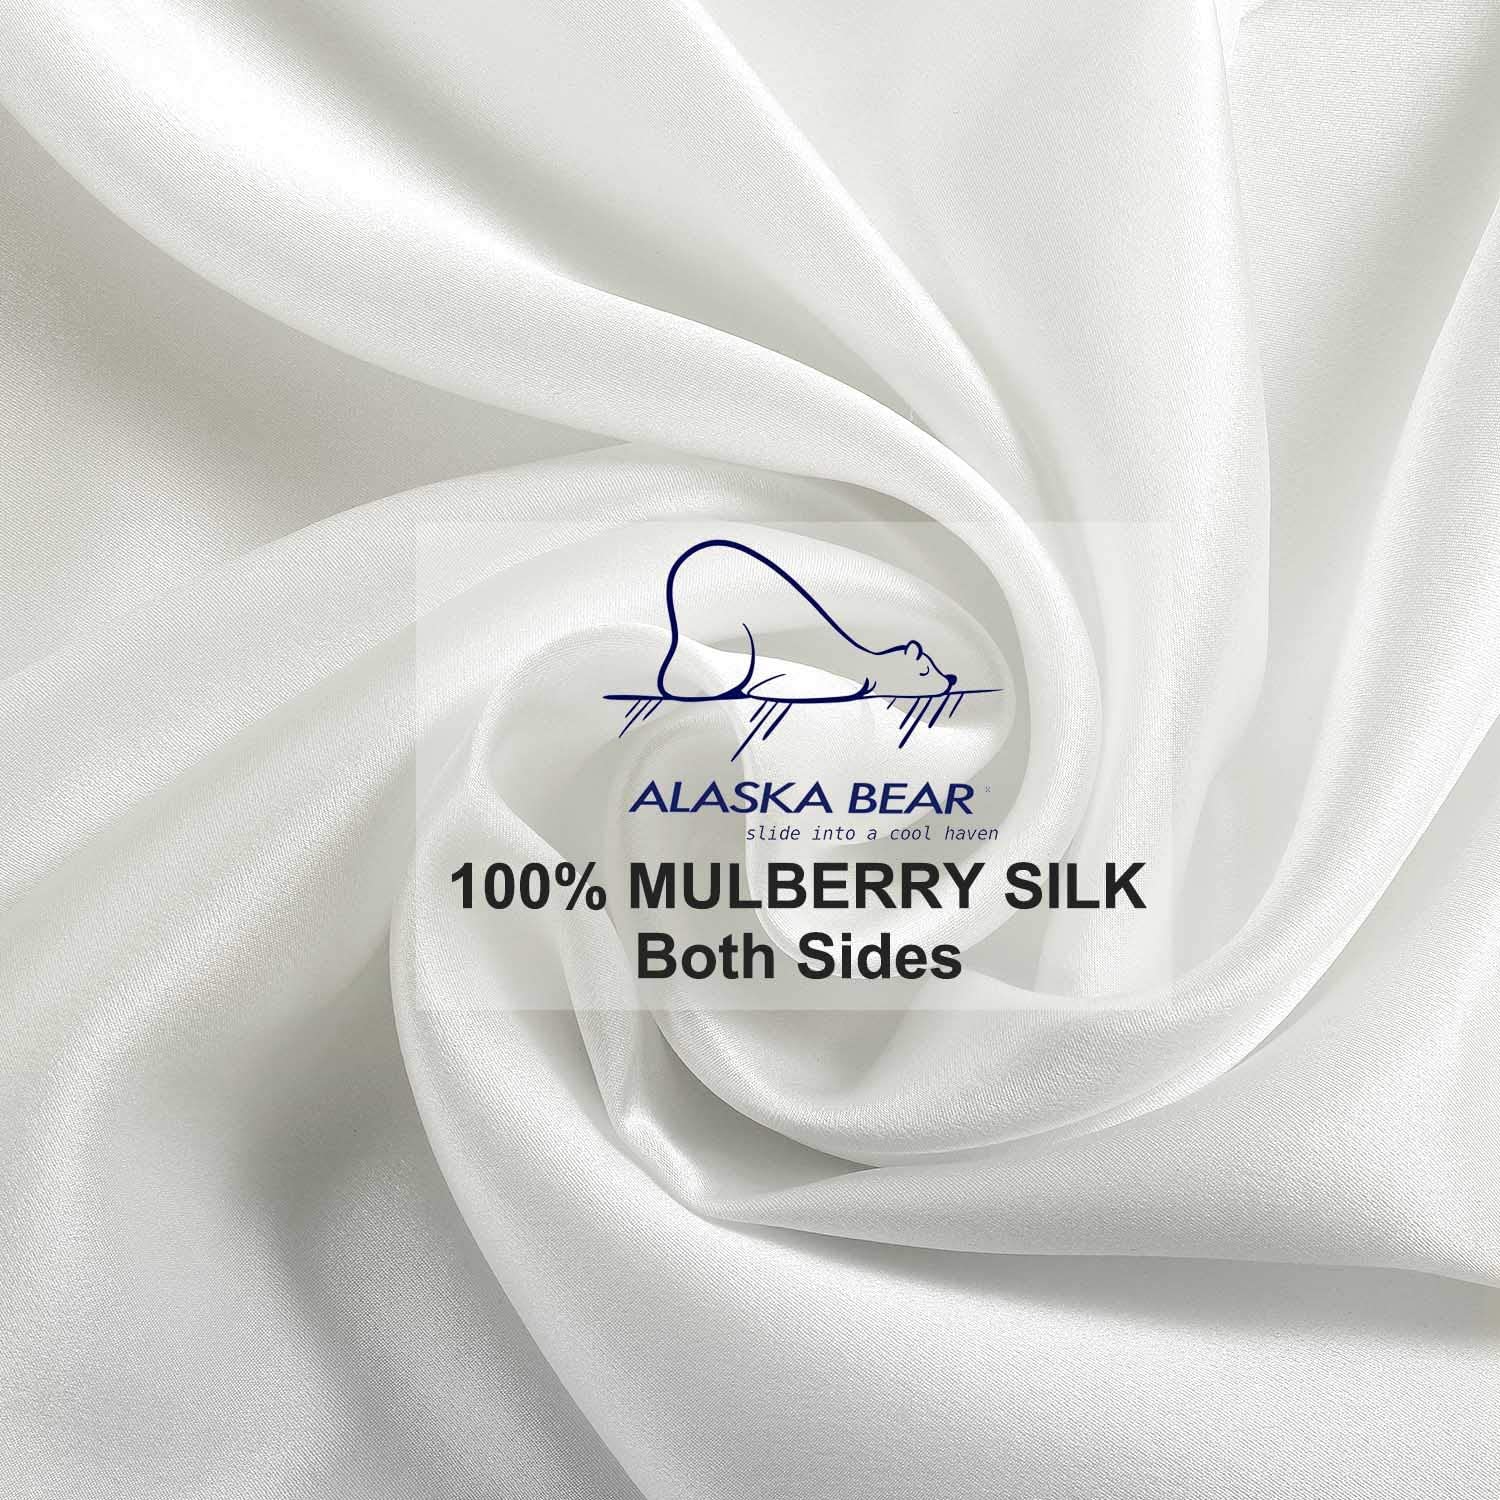 Alaska Bear 100% Mulberry Silk Pillowcase for Hair, Skin, and Health - Hypoallergenic, Standard Size 50x75cm Natural Silk Pillow Case Slip for Beauty Sleep (1pc, Ivory White) 4